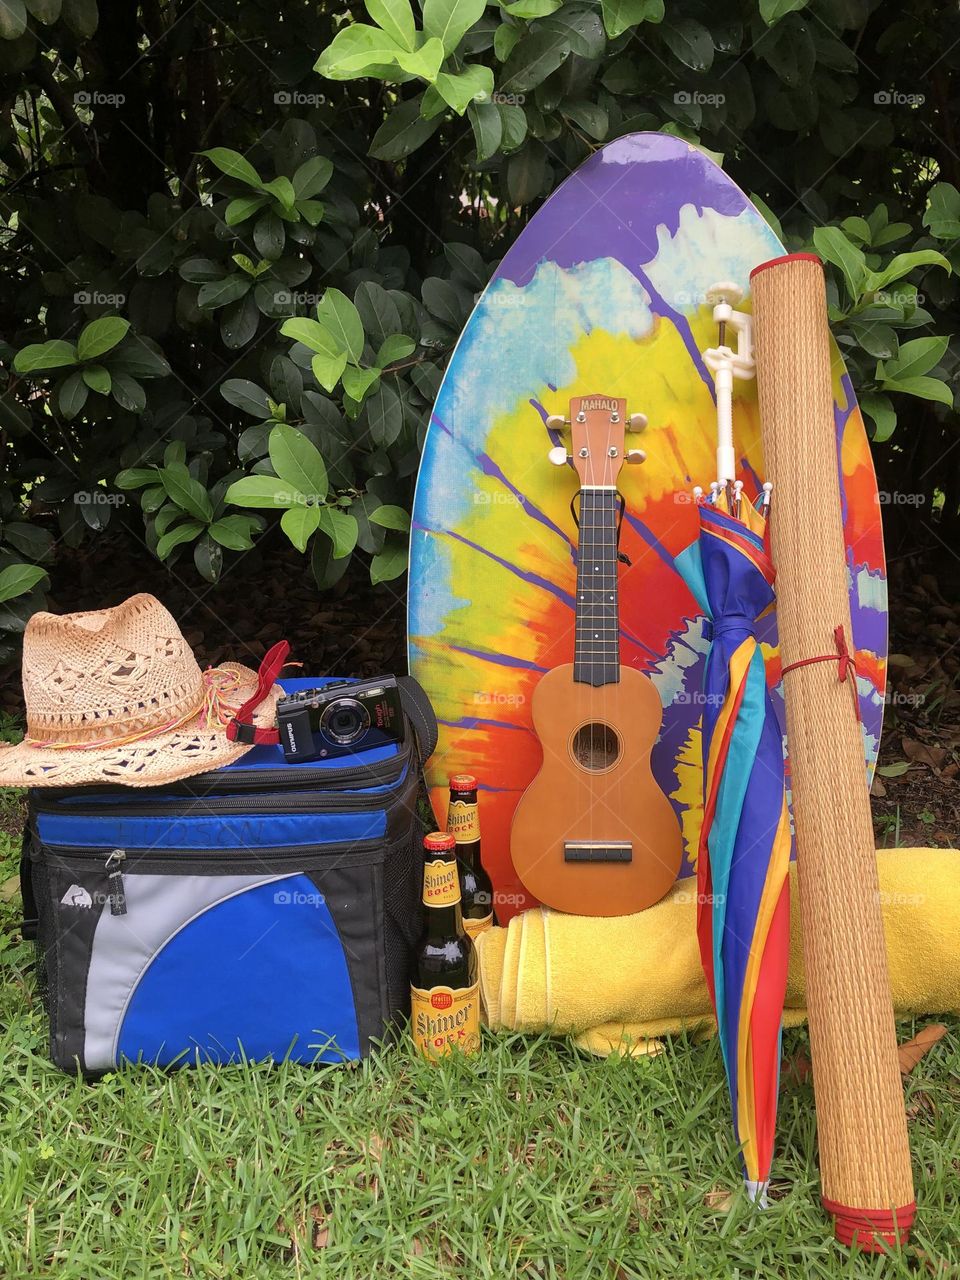 Must have fun at beach with cooler snack beer camera hat bodyboard ukulele towel mat umbrella 